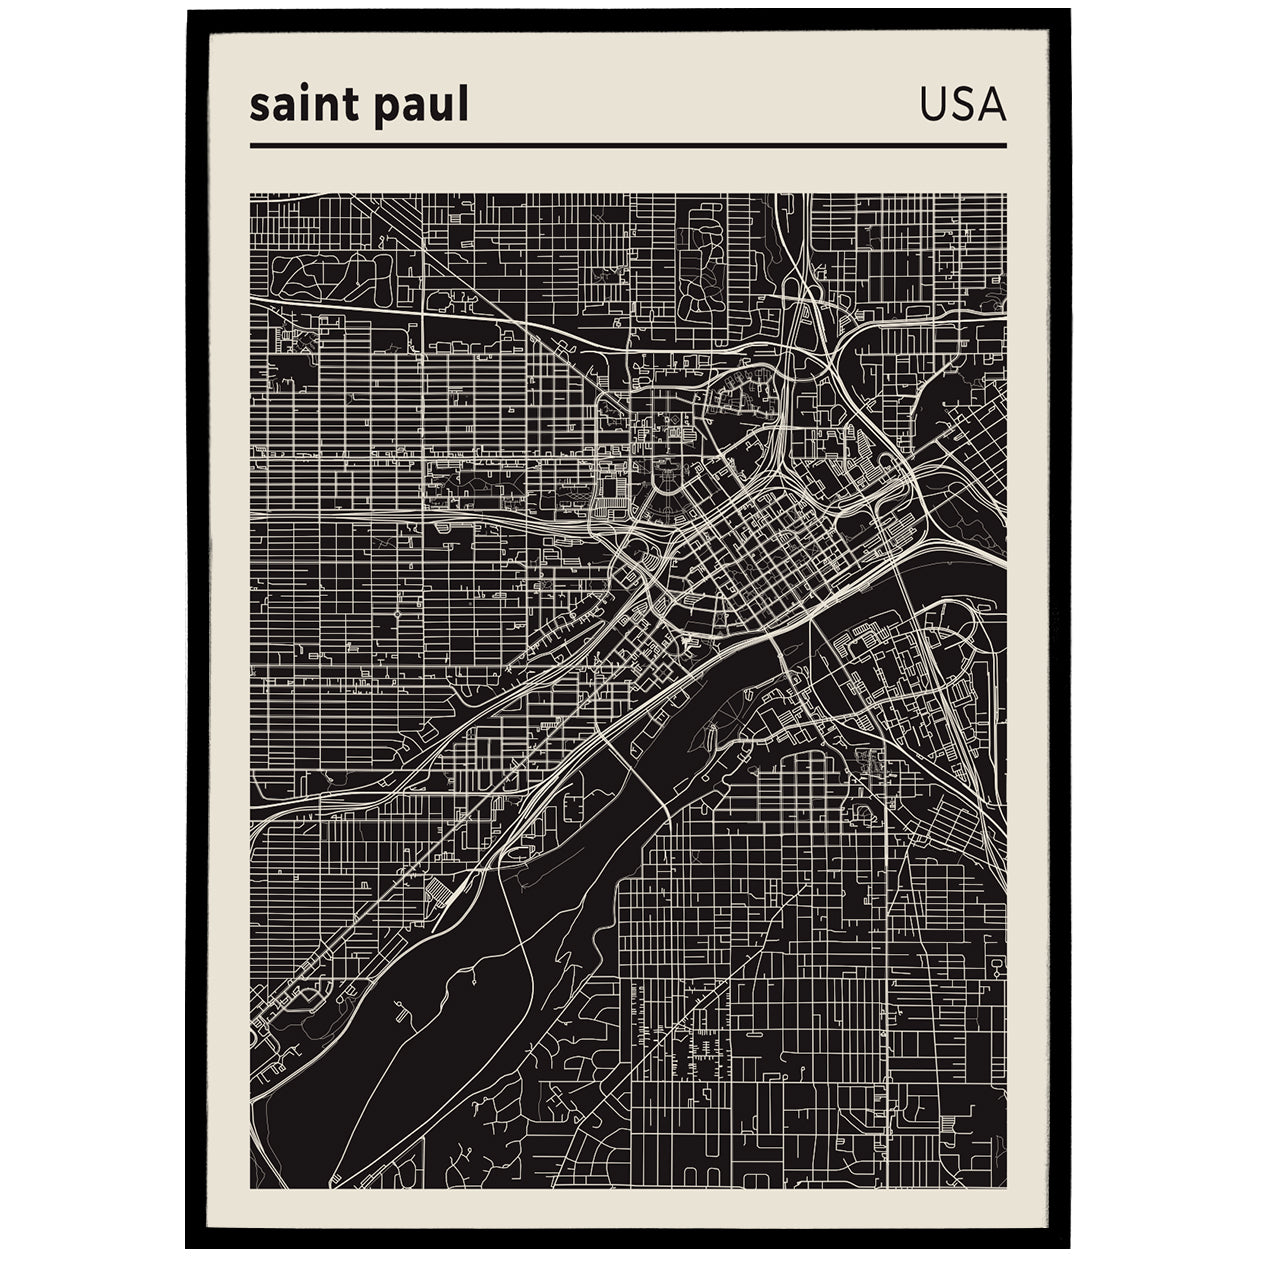 Saint Paul - USA, City Map Poster